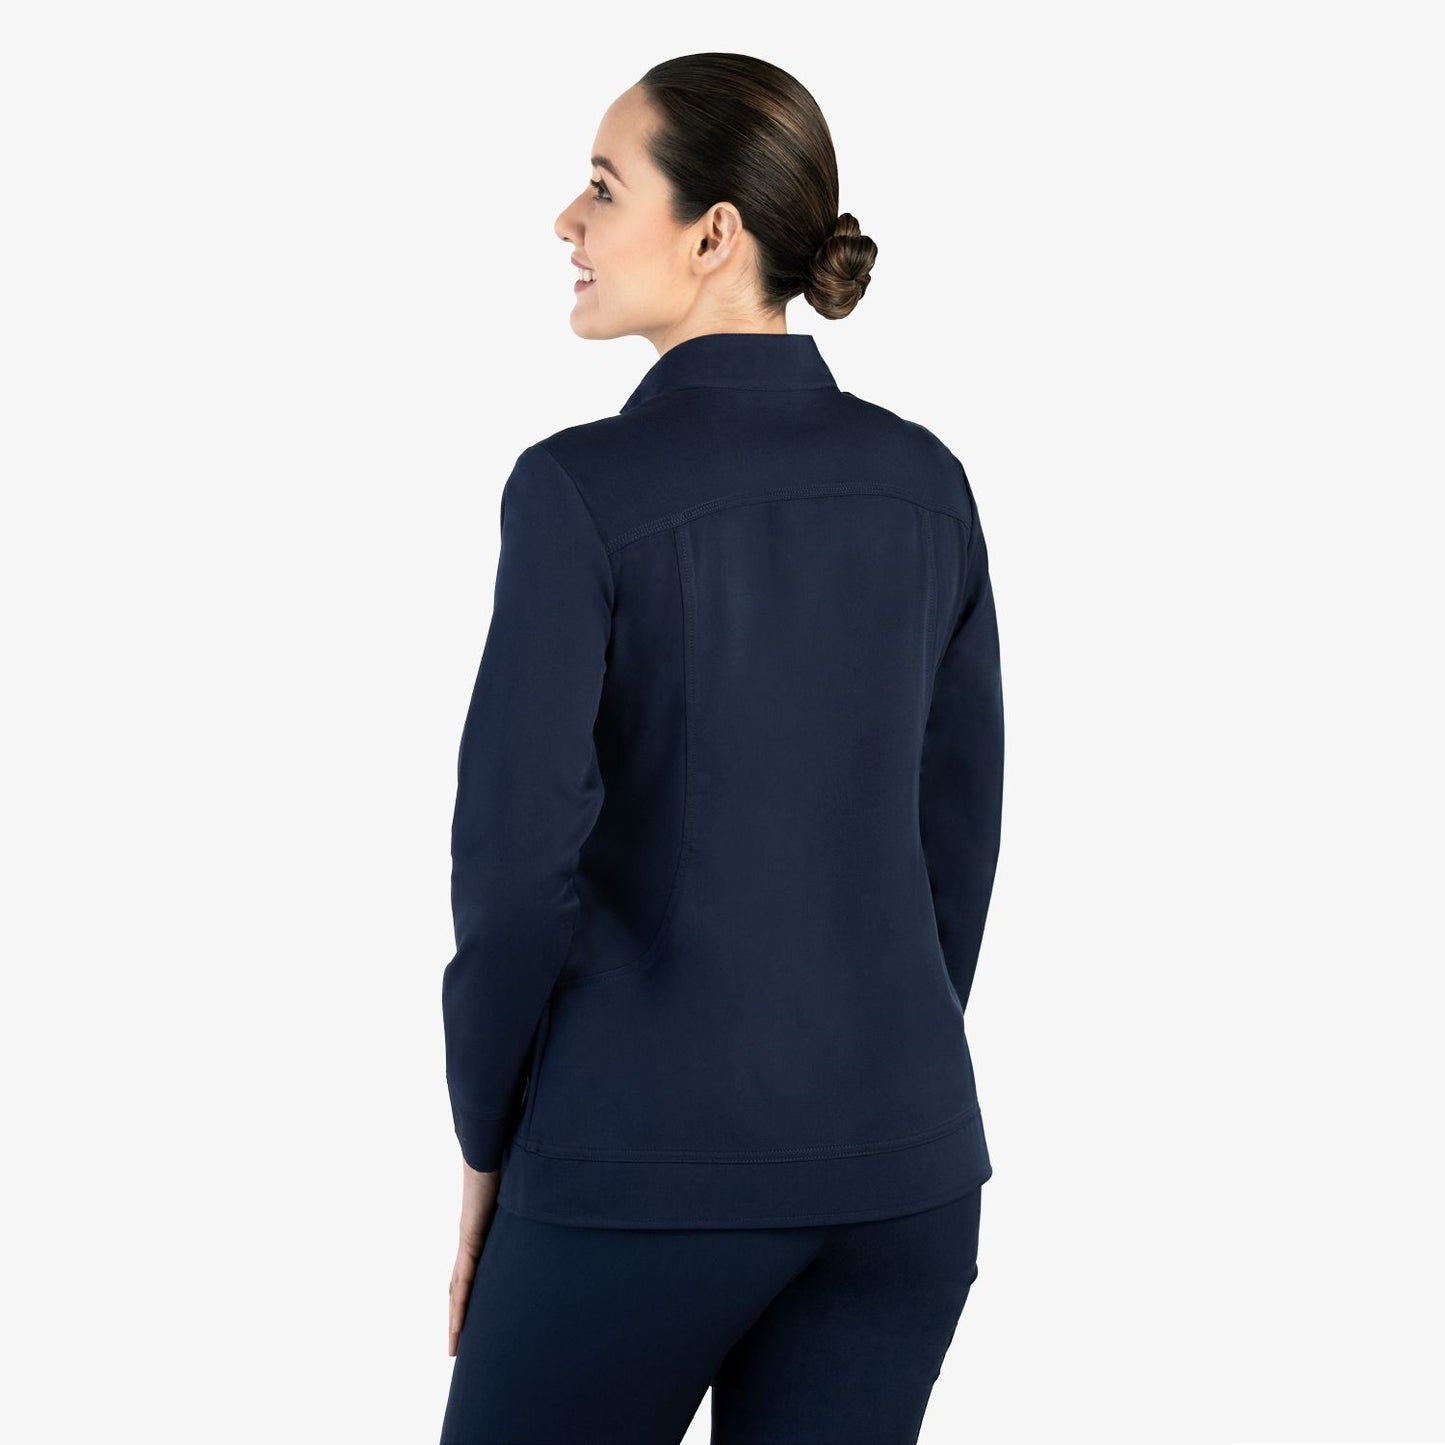 Women’s Ergo 2.0 Warm-Up Jacket